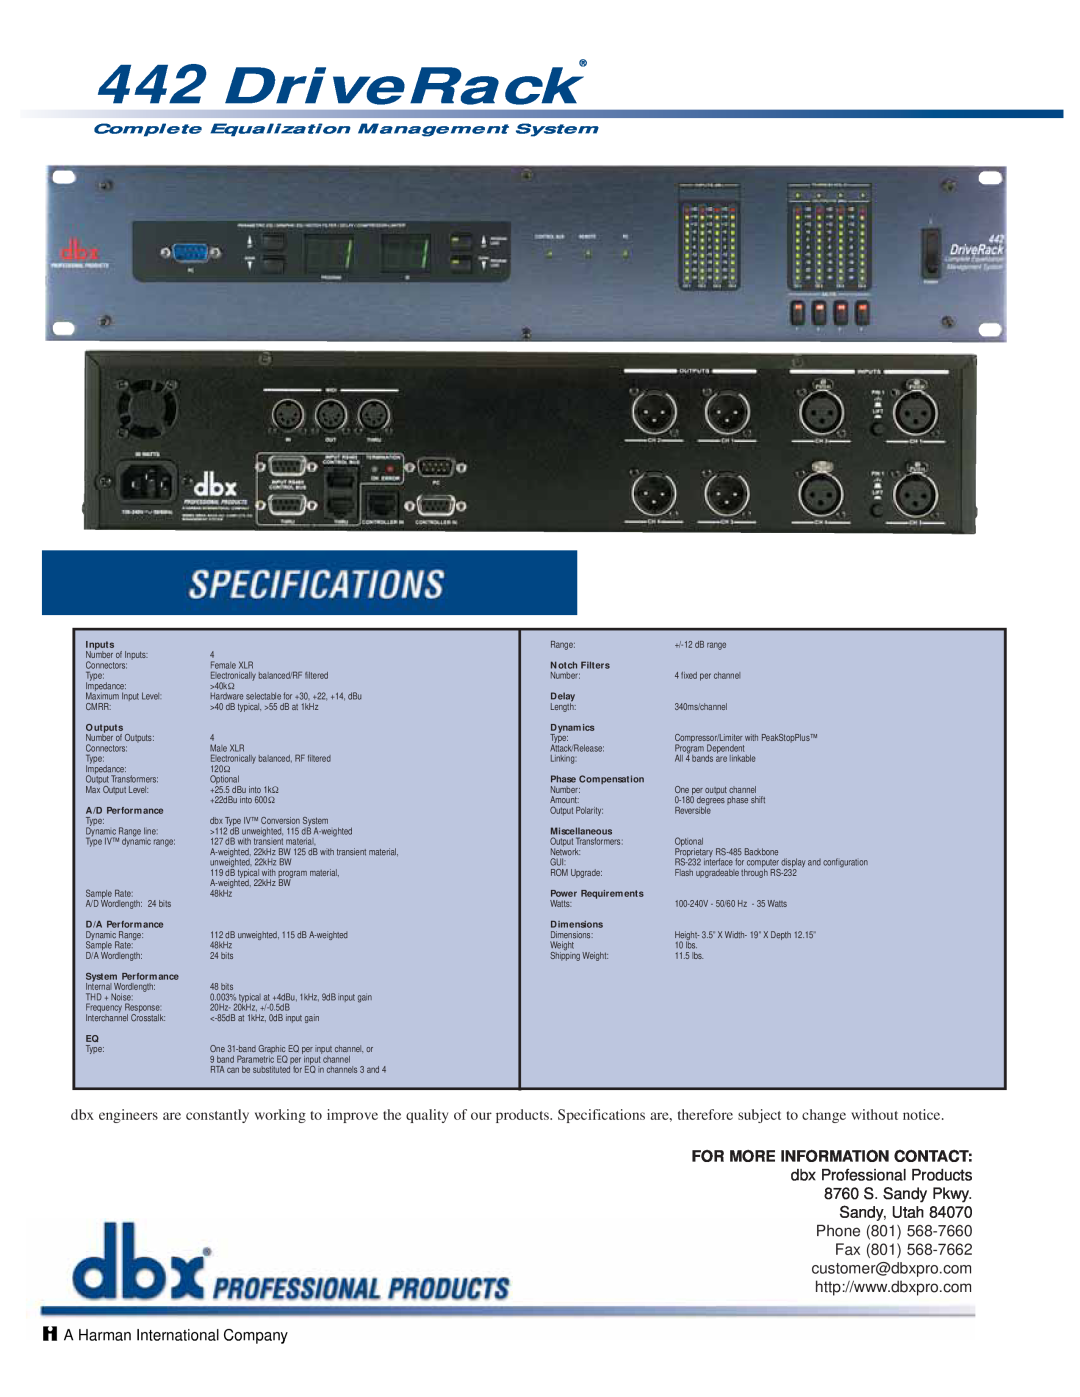 dbx Pro manual 442DriveRack, Complete Equalization Management System, A Harman International Company 